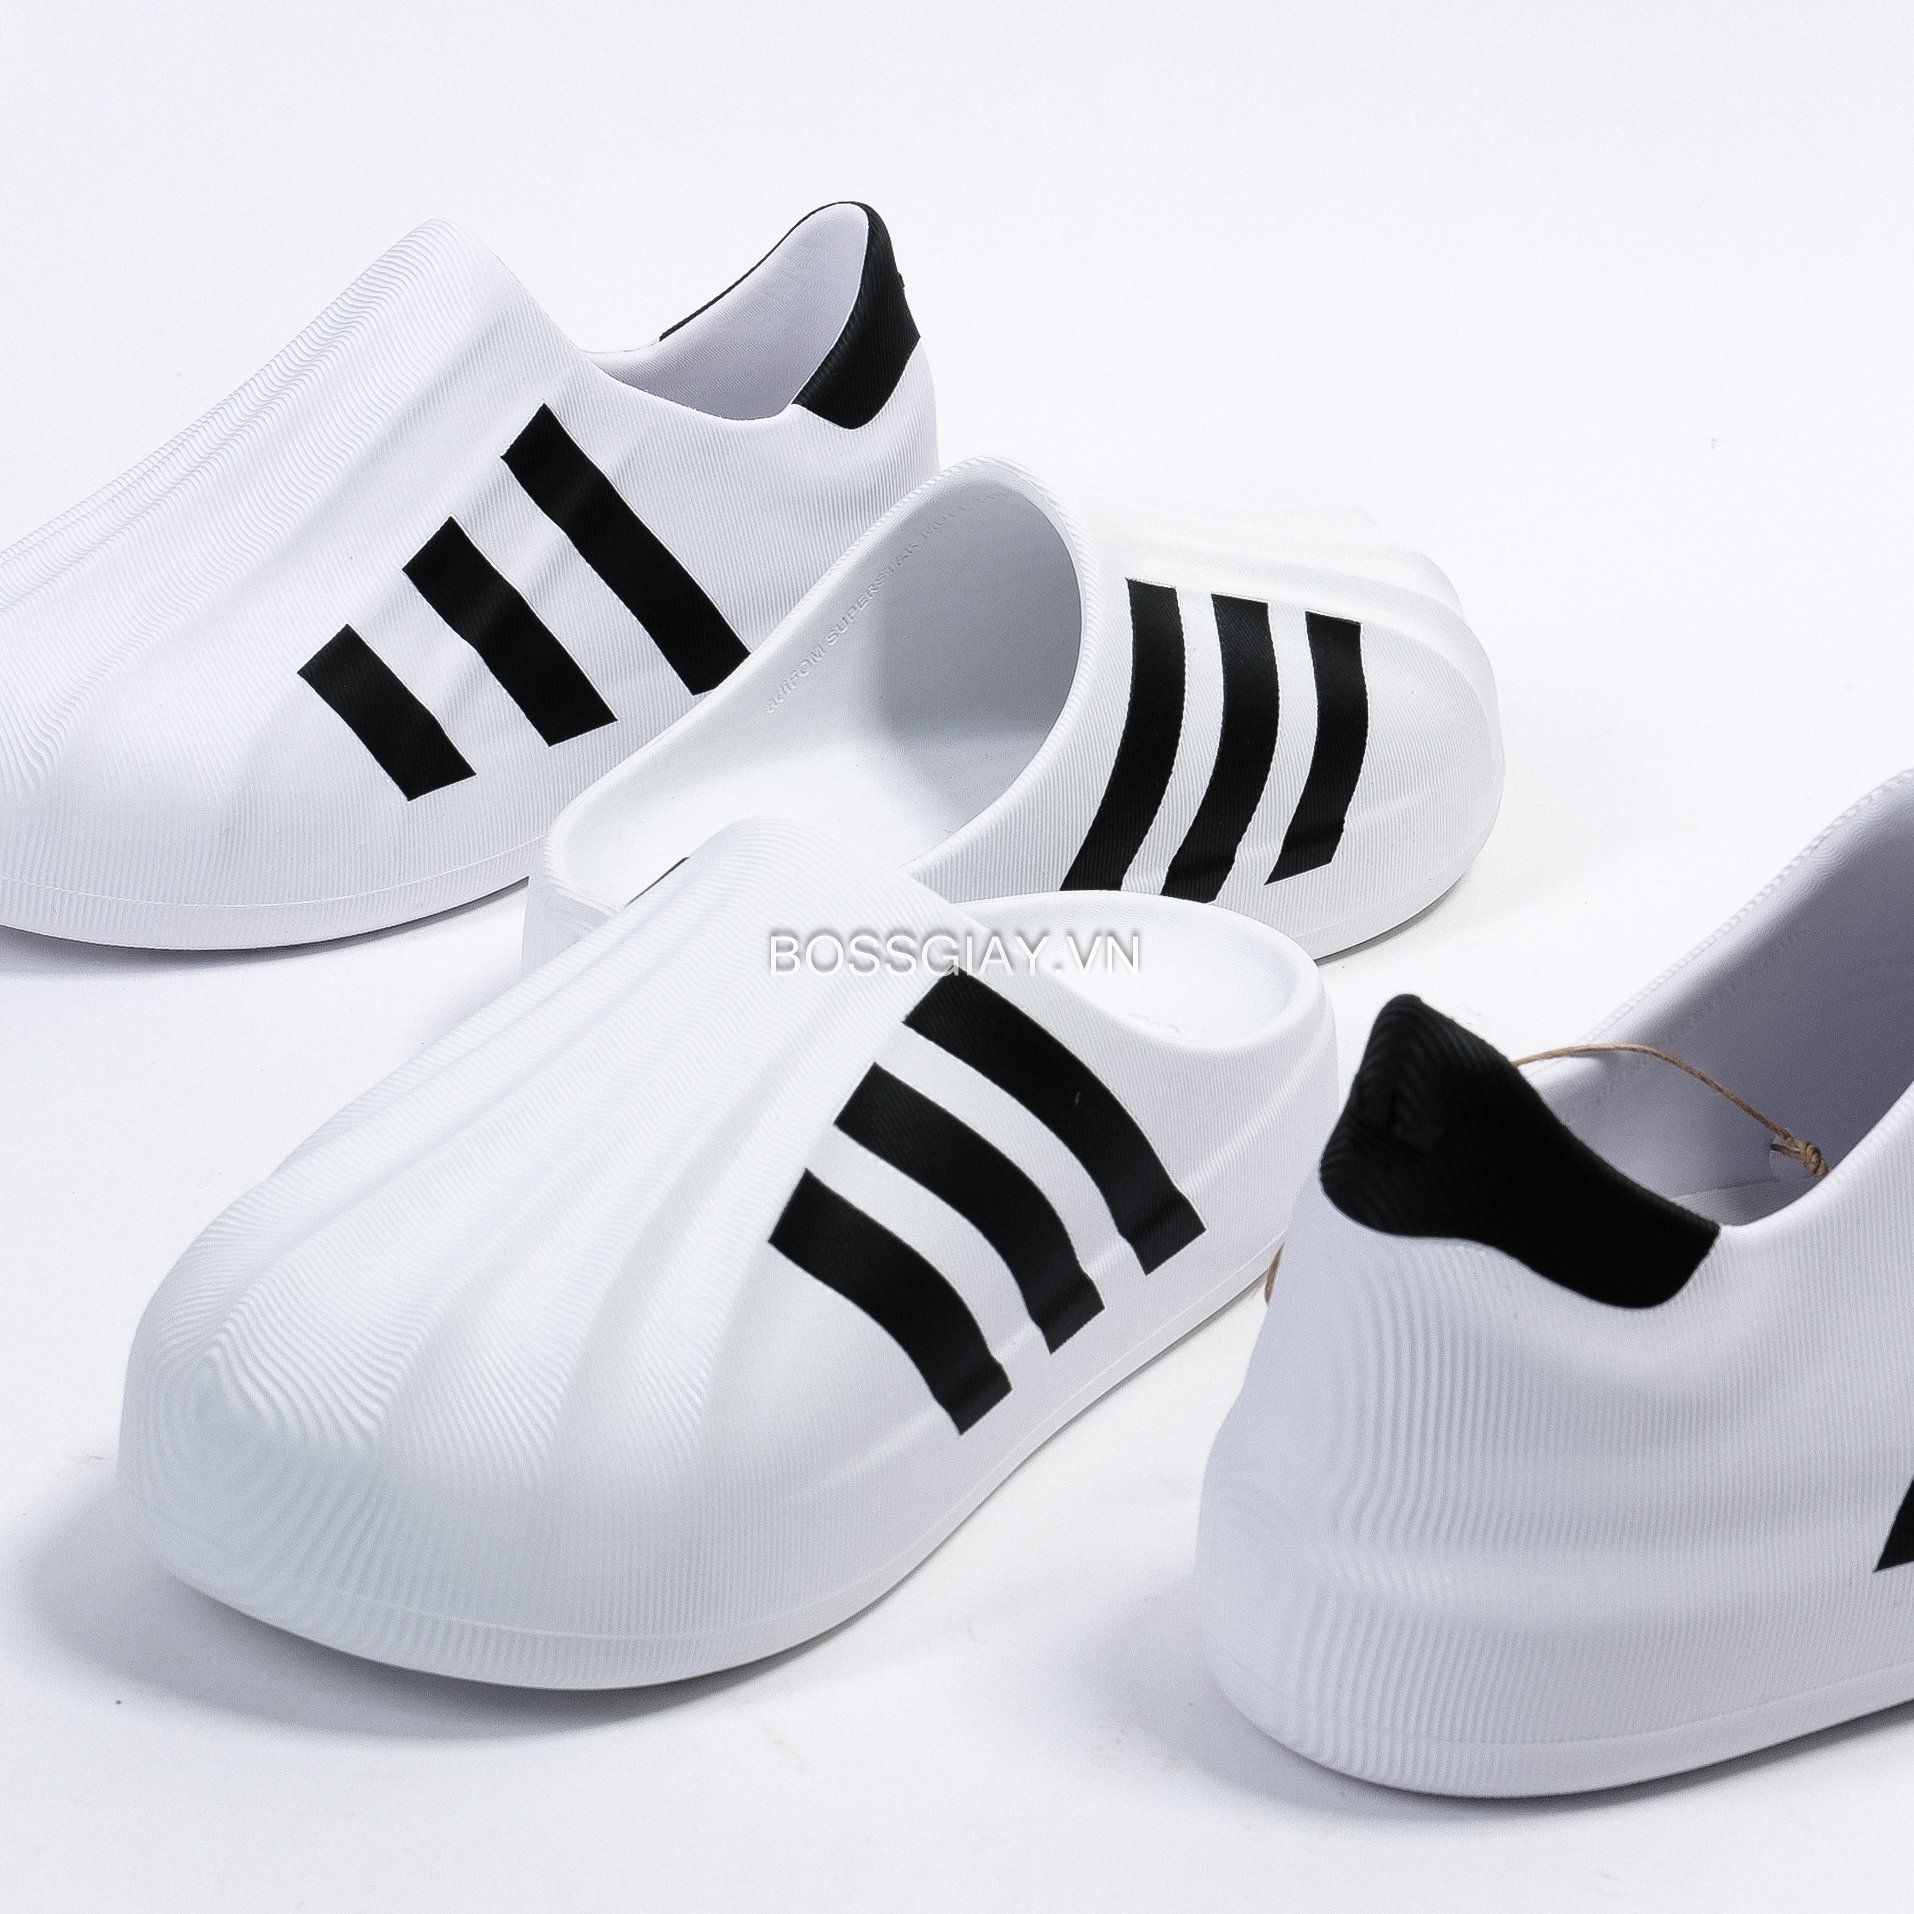  Adidas adiFOM Superstar Mule Black   White IF6184 